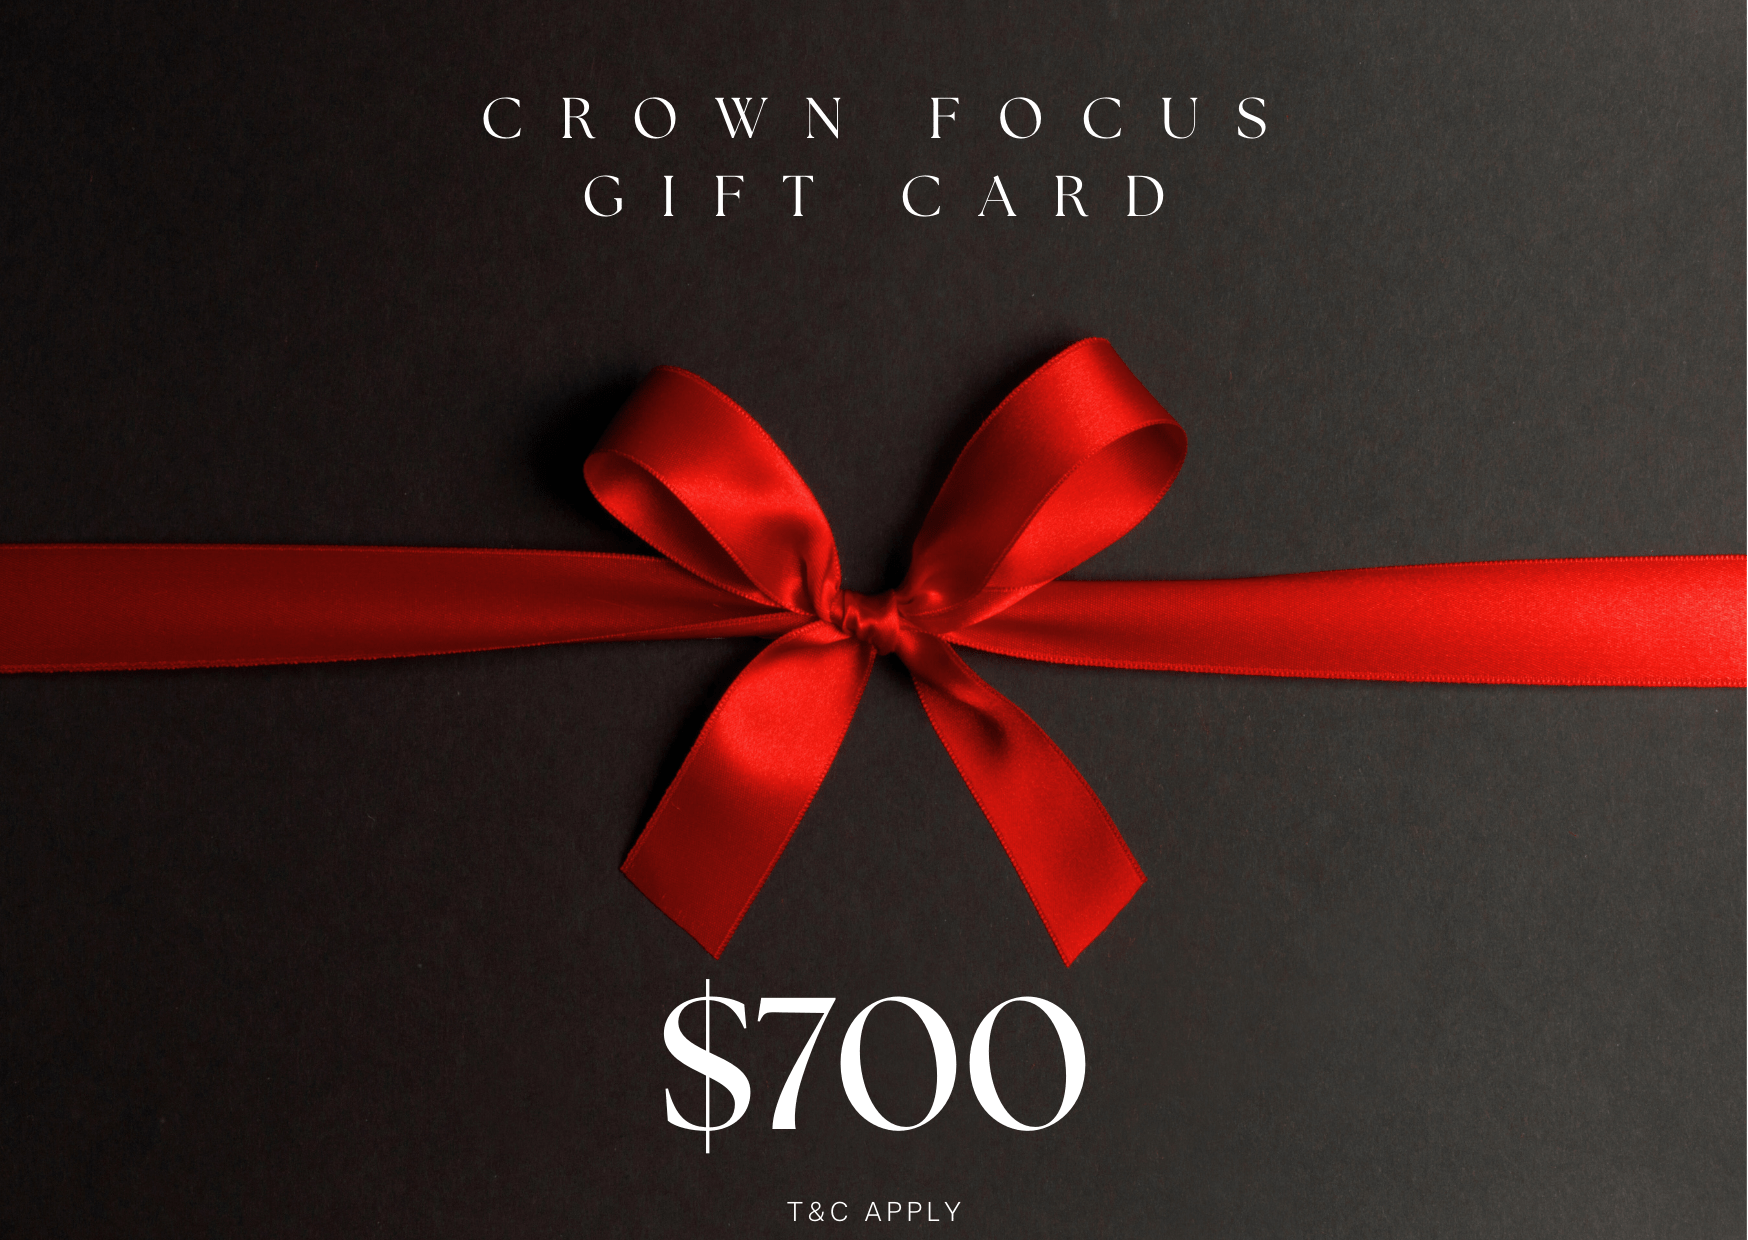 CrownFocus Gift Card - CrownFocus